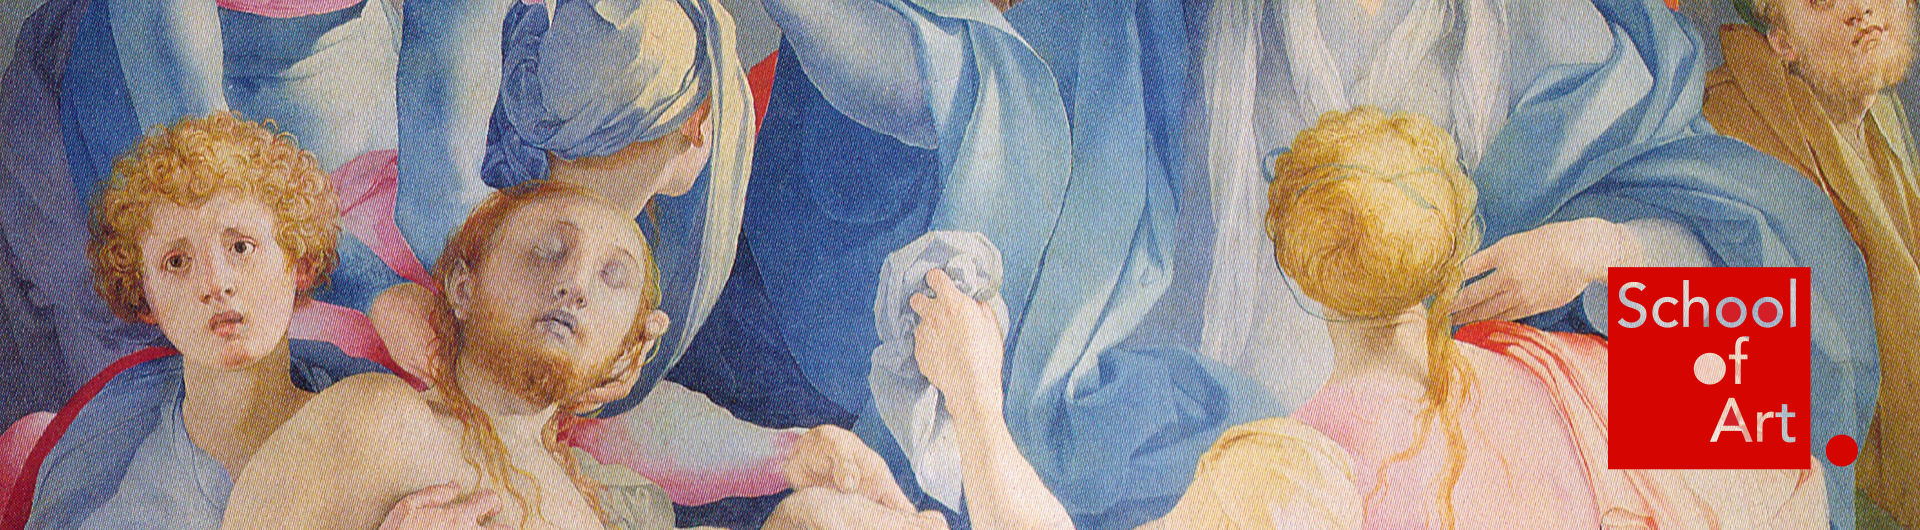 Renaissance era painting by the artist Pontormo, depicting religious figures